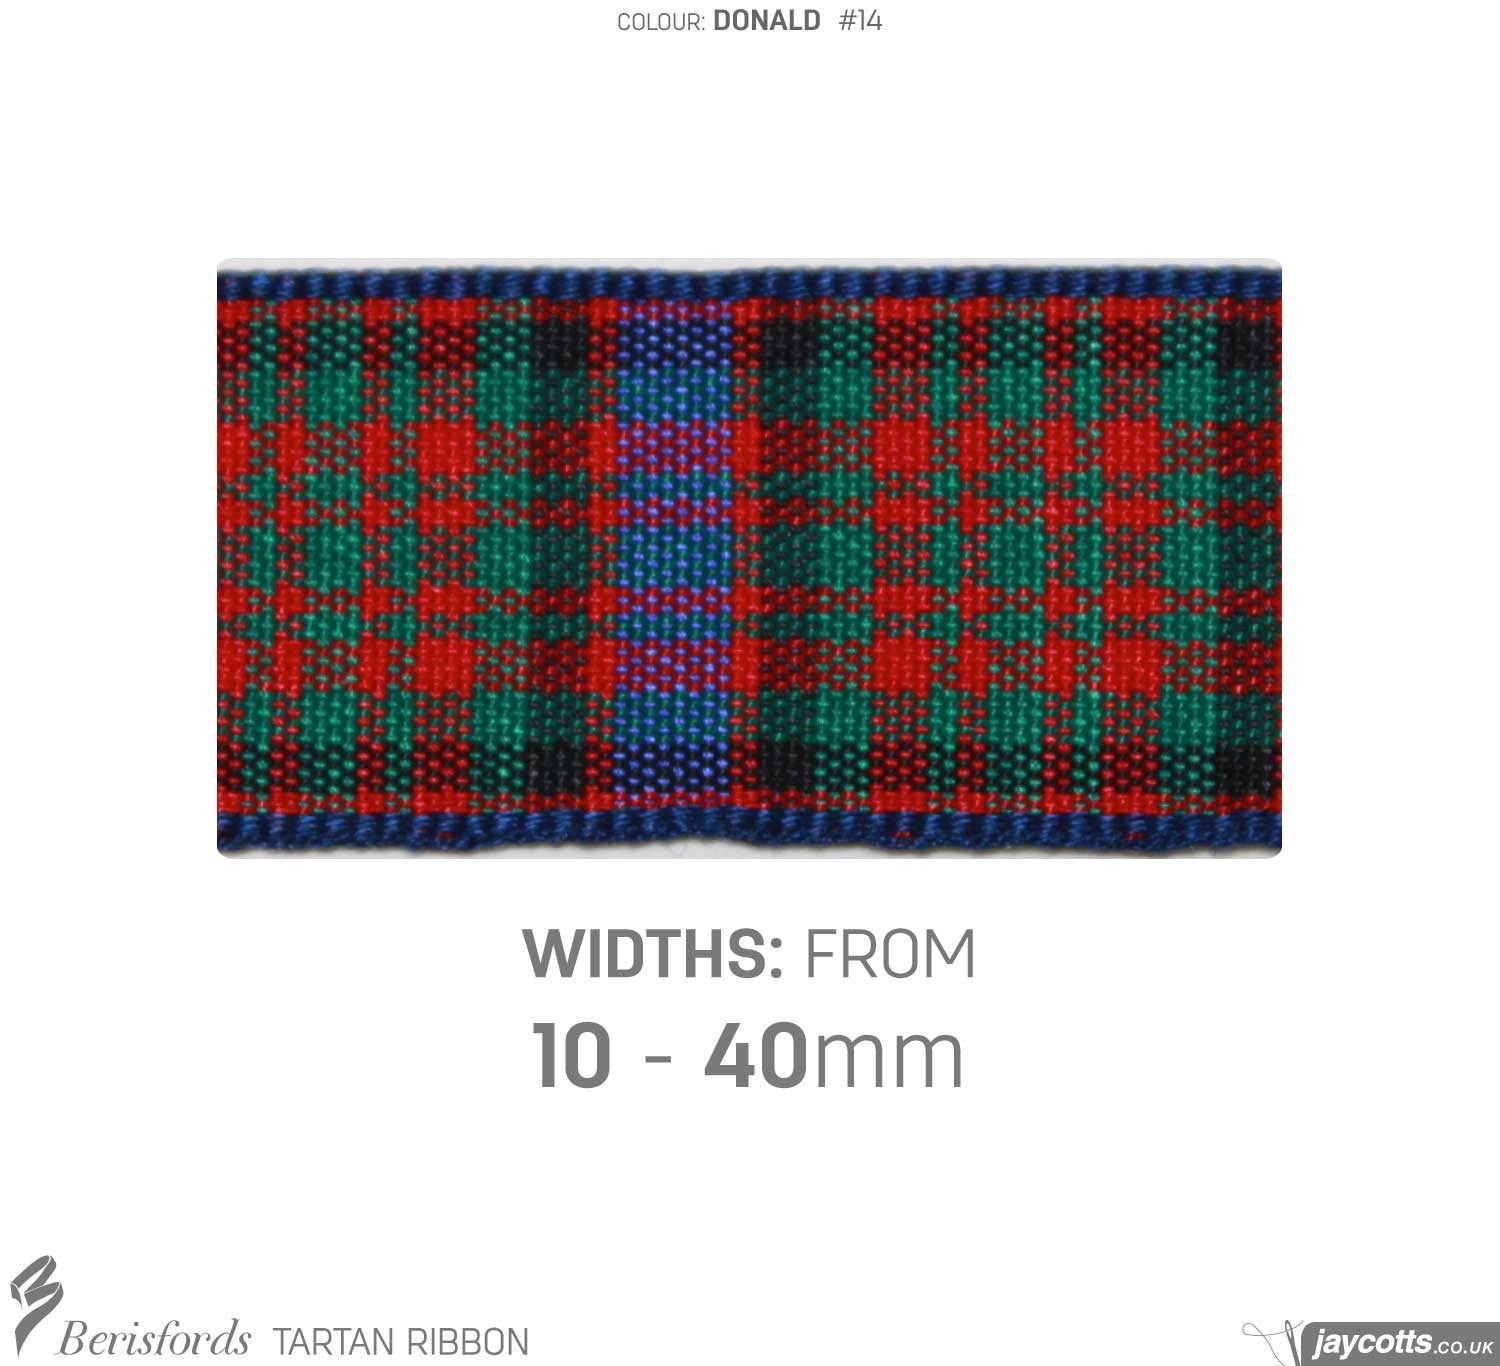 Berisfords Tartan Ribbon: #14 Macdonald from Jaycotts Sewing Supplies